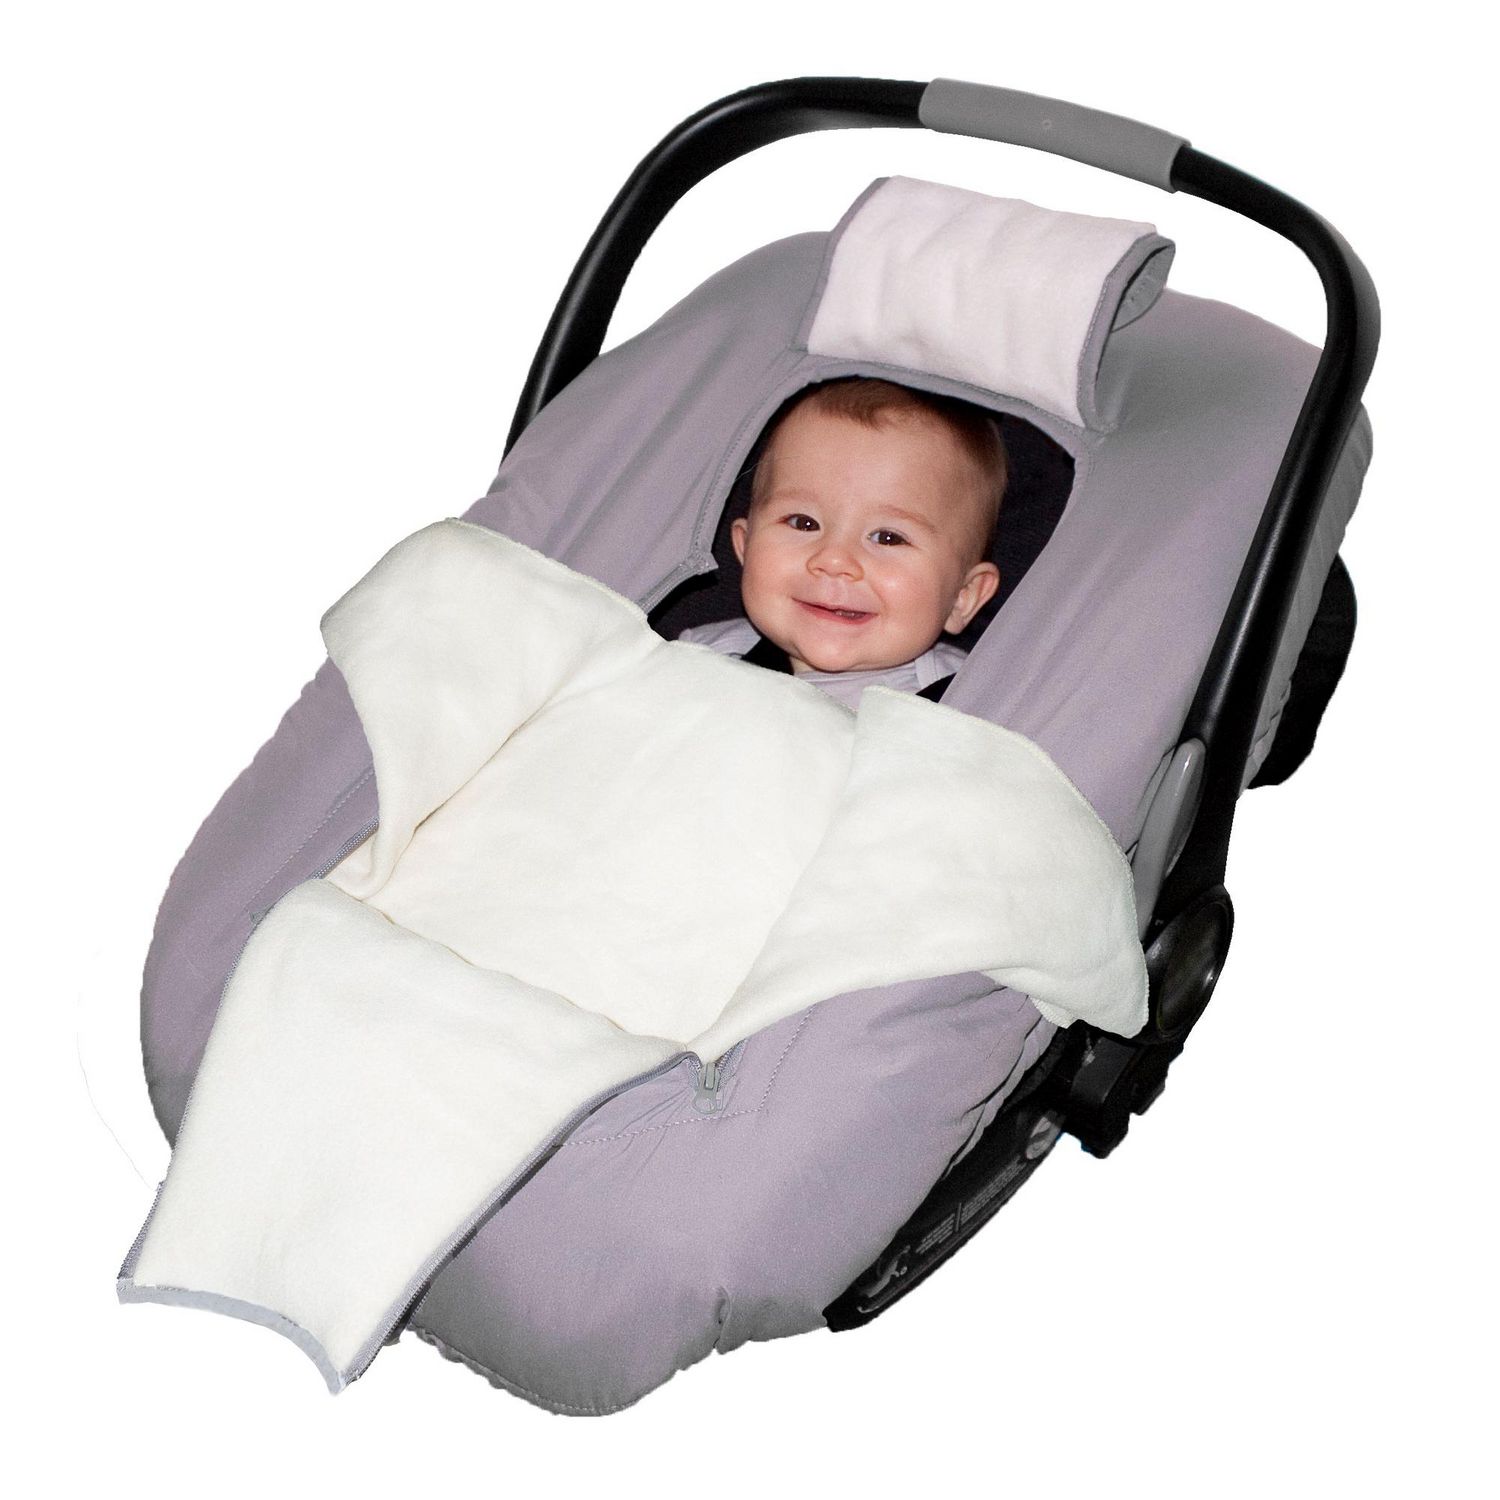 Jolly Jumper Arctic Sneak-A-Peek Infant Car Seat Cover